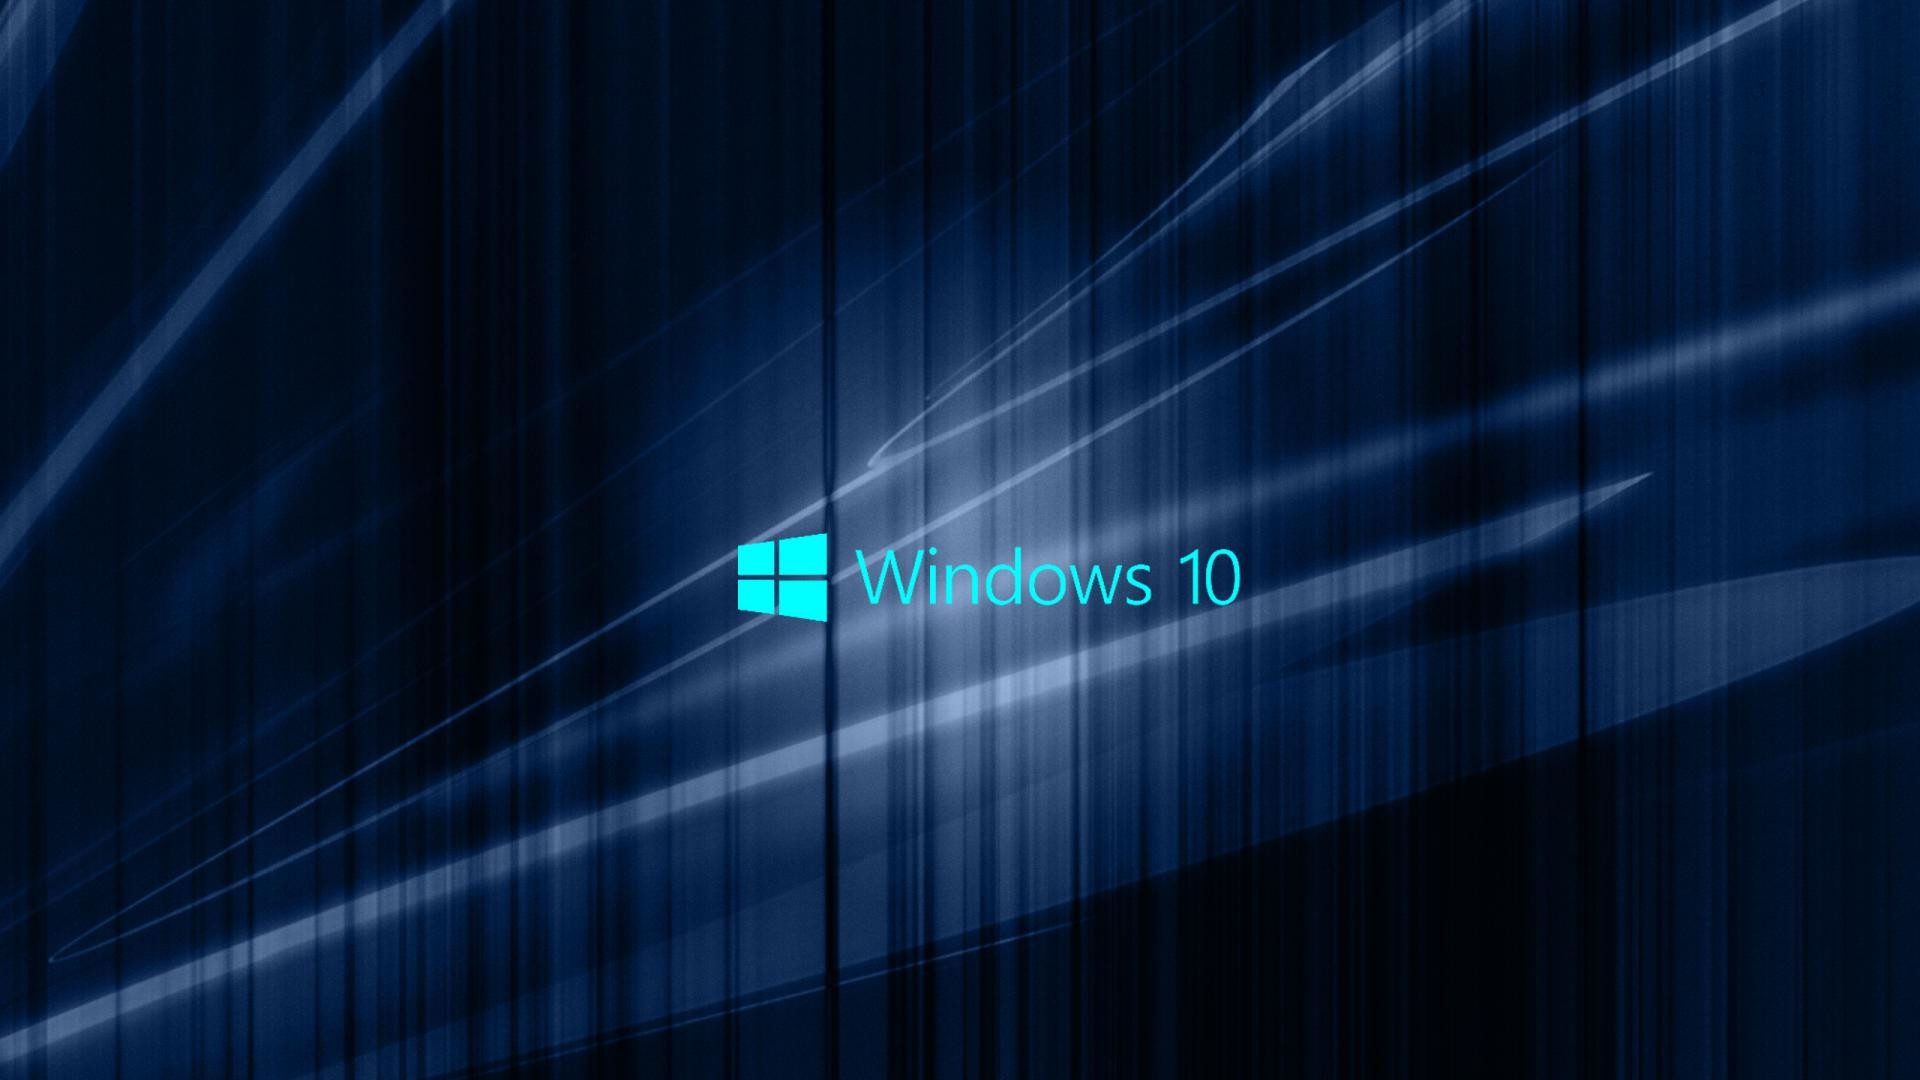 Windows 10 1366x768 Wallpaper (58+ images)